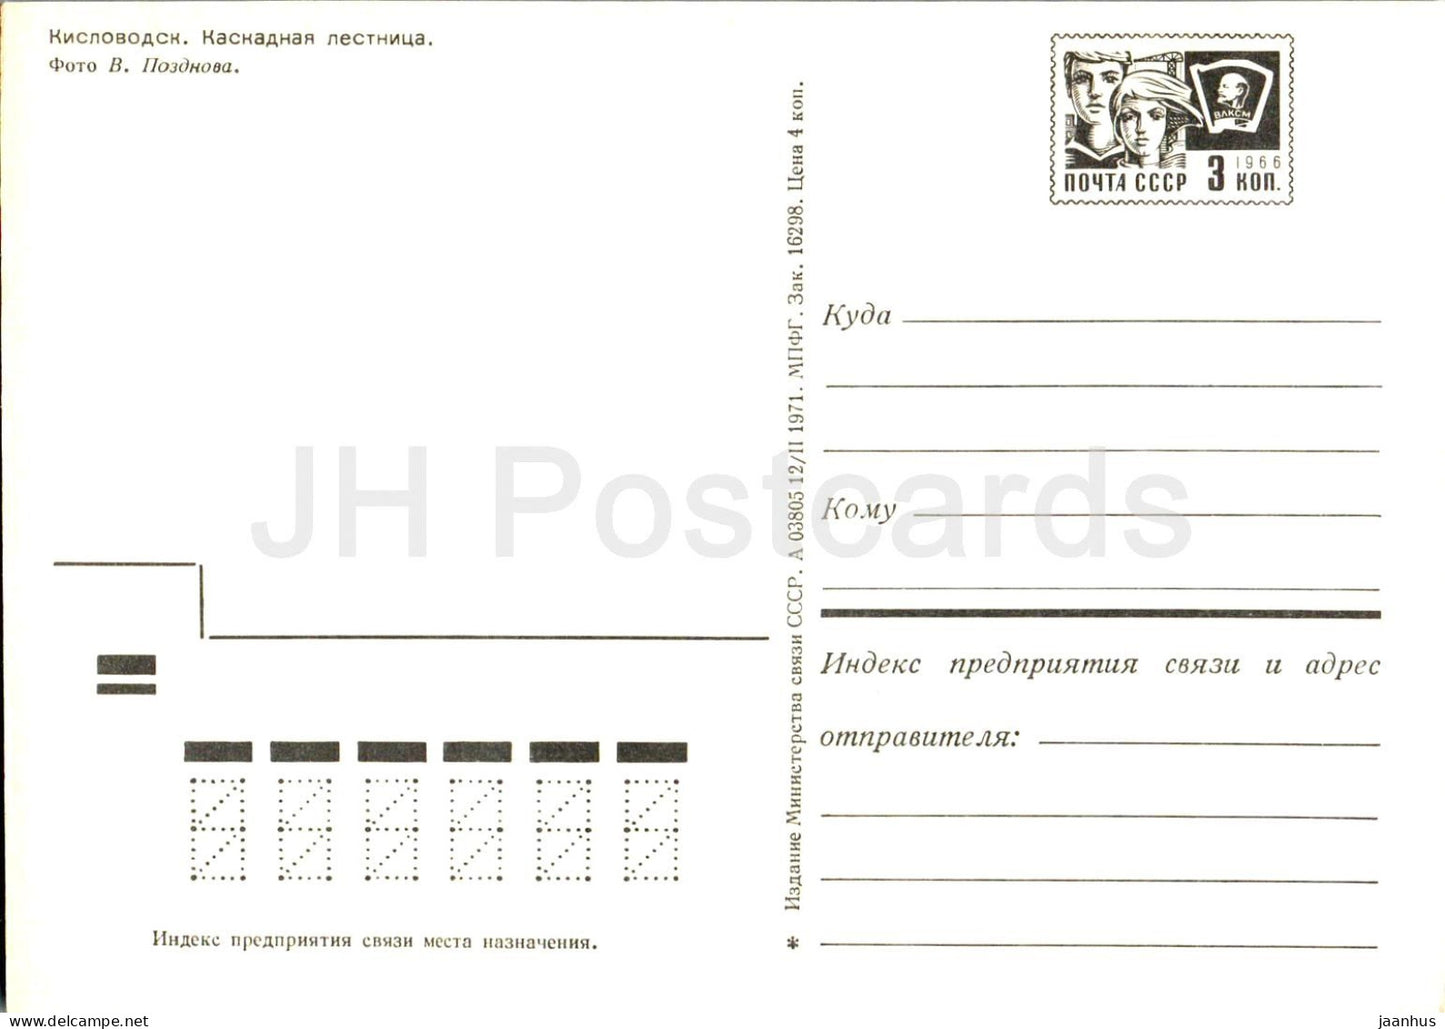 Kislovodsk - escalier en cascade - entier postal - 1971 - Russie URSS - inutilisé 